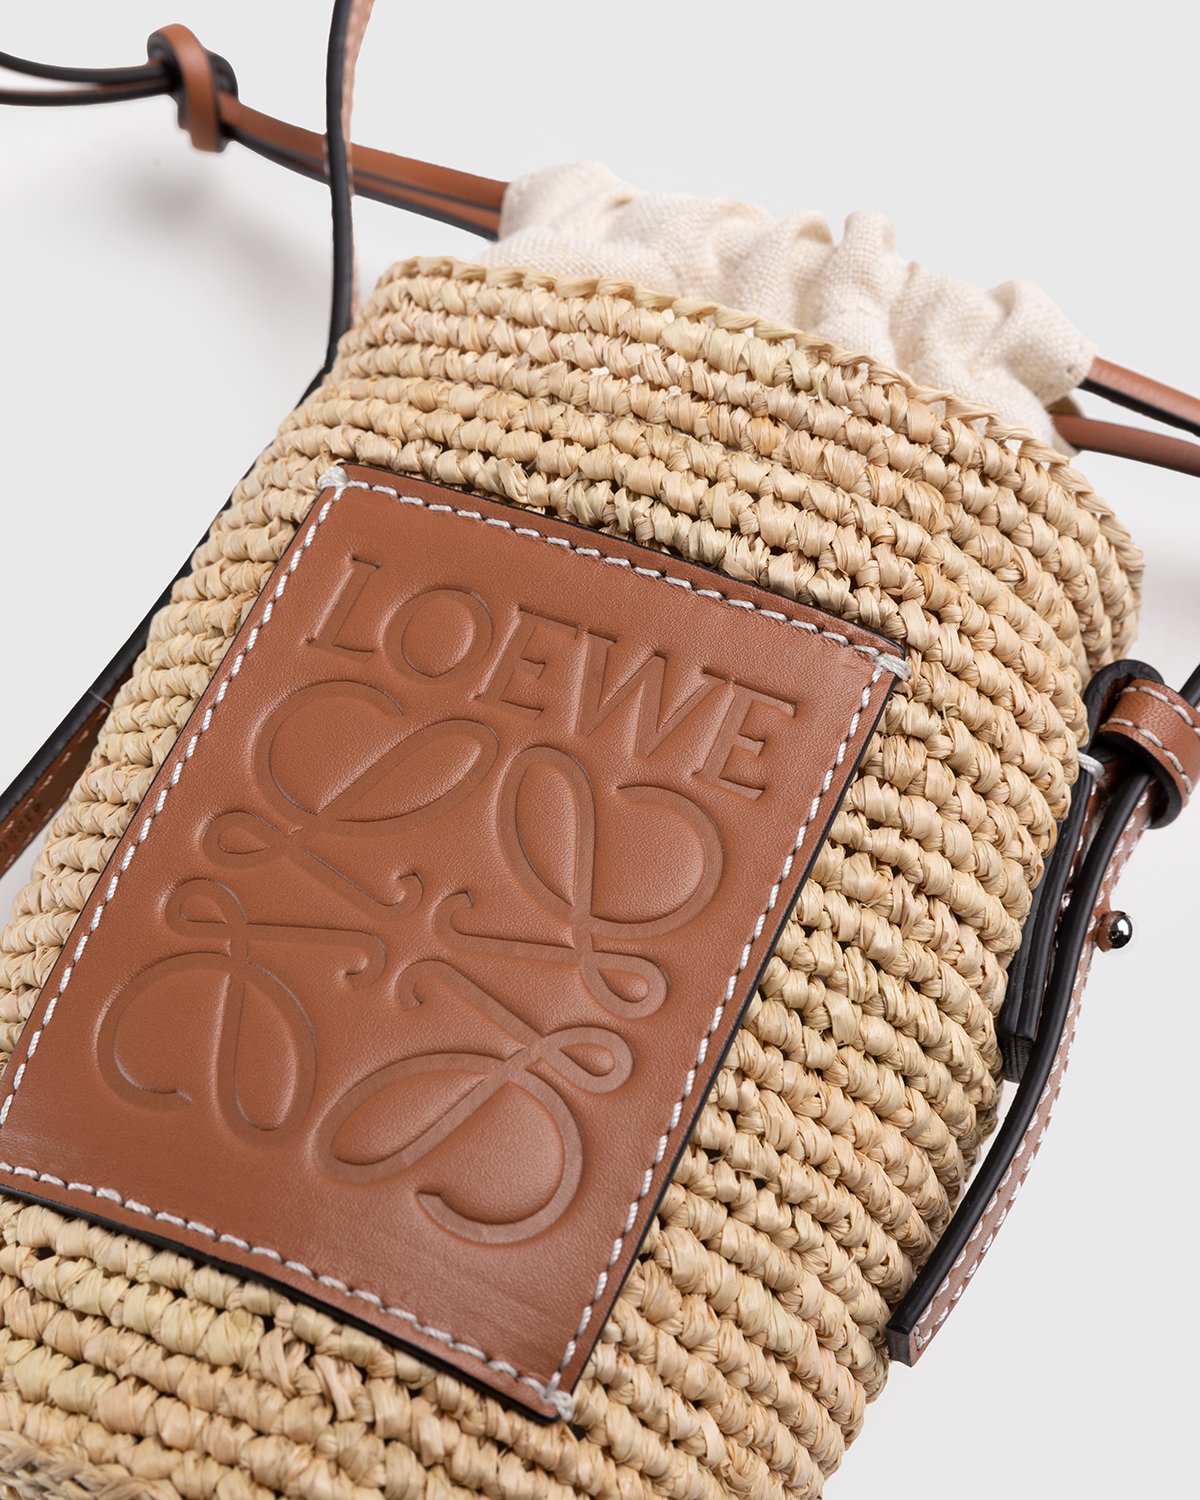 Loewe - Paula's Ibiza Cylinder Pocket Bag Natural/Tan - Accessories - Brown - Image 3